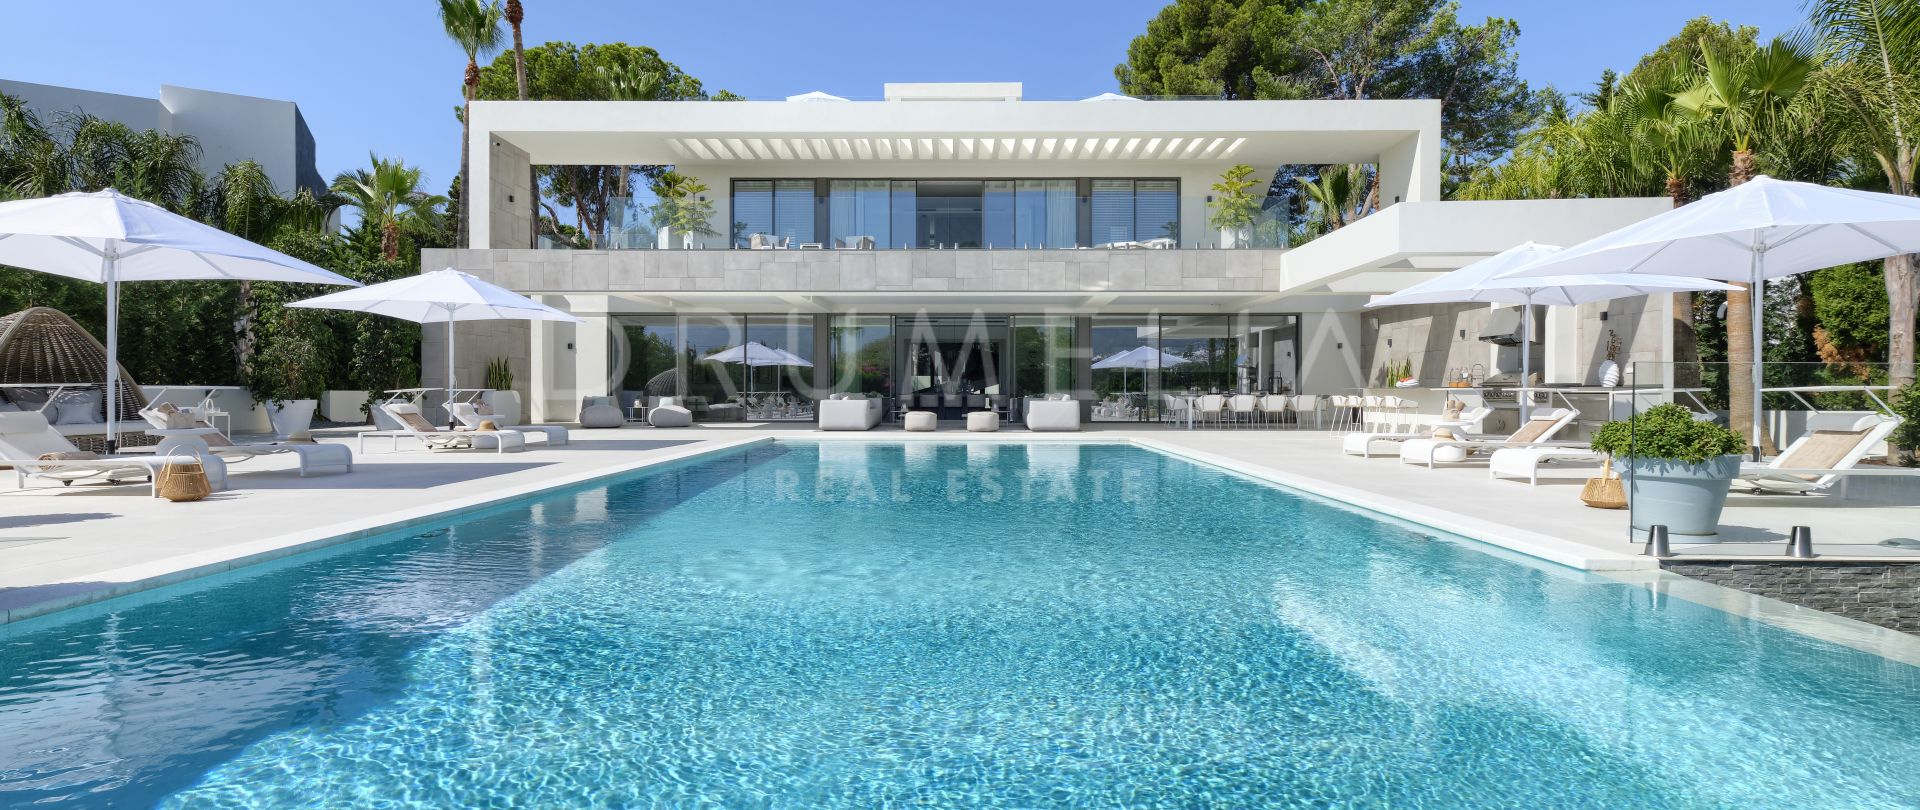 La Villa - New Stylish Frontline Golf Modern Luxury House in Nueva Andalucía, Marbella